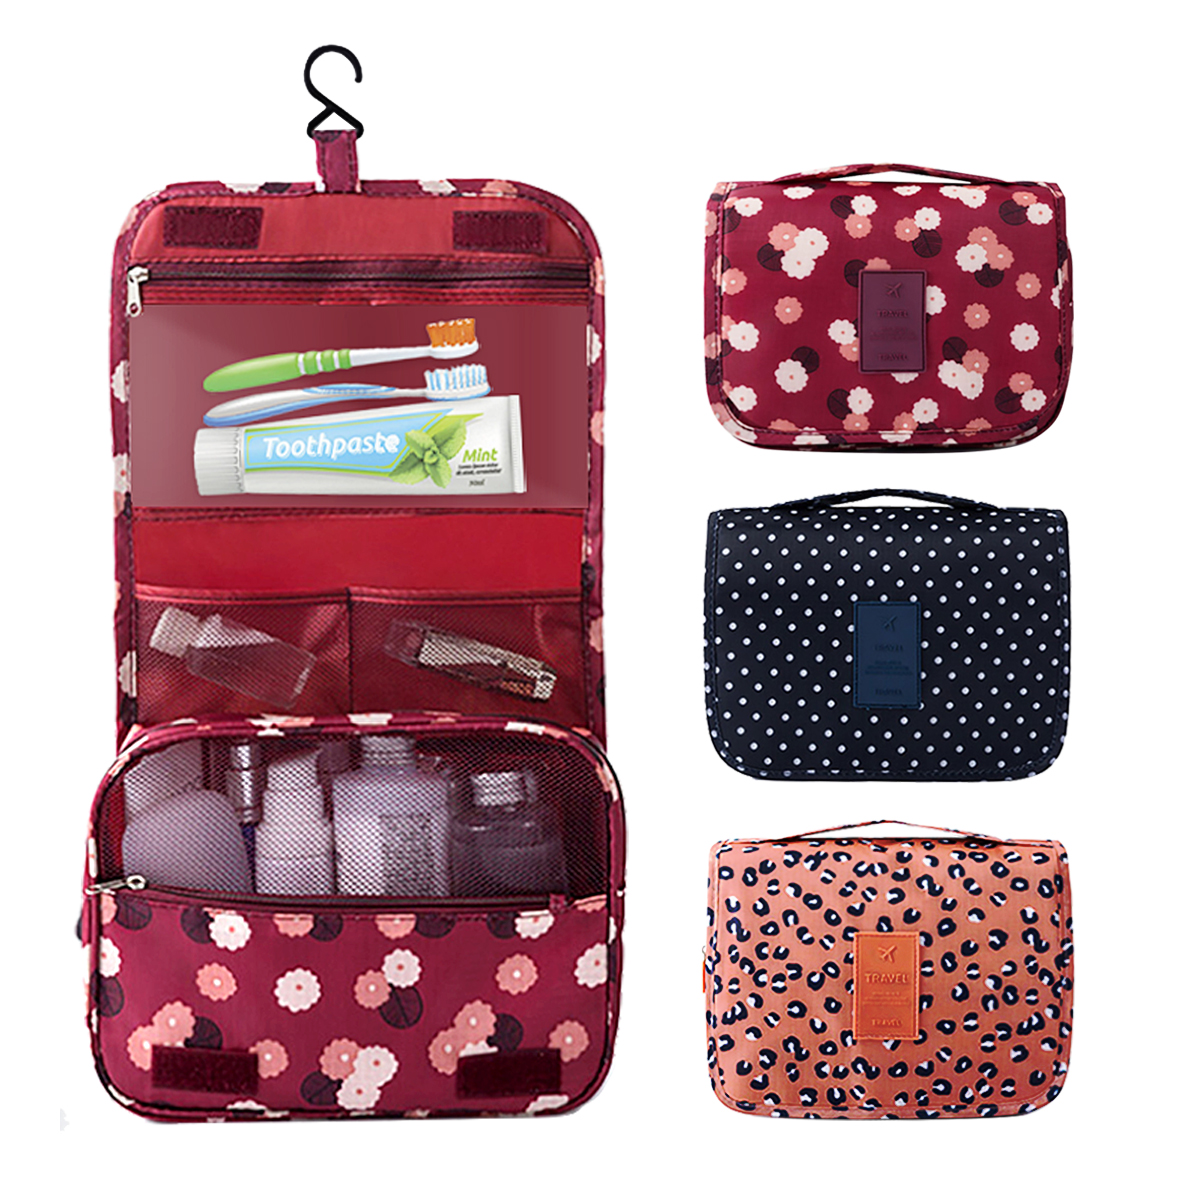 Portable Travel Toiletry Bag Travel Home Organizer Carry Cosmetic Makeup Bag, Wash Organizer Storage Handbag Pouch Bag - image 1 of 7